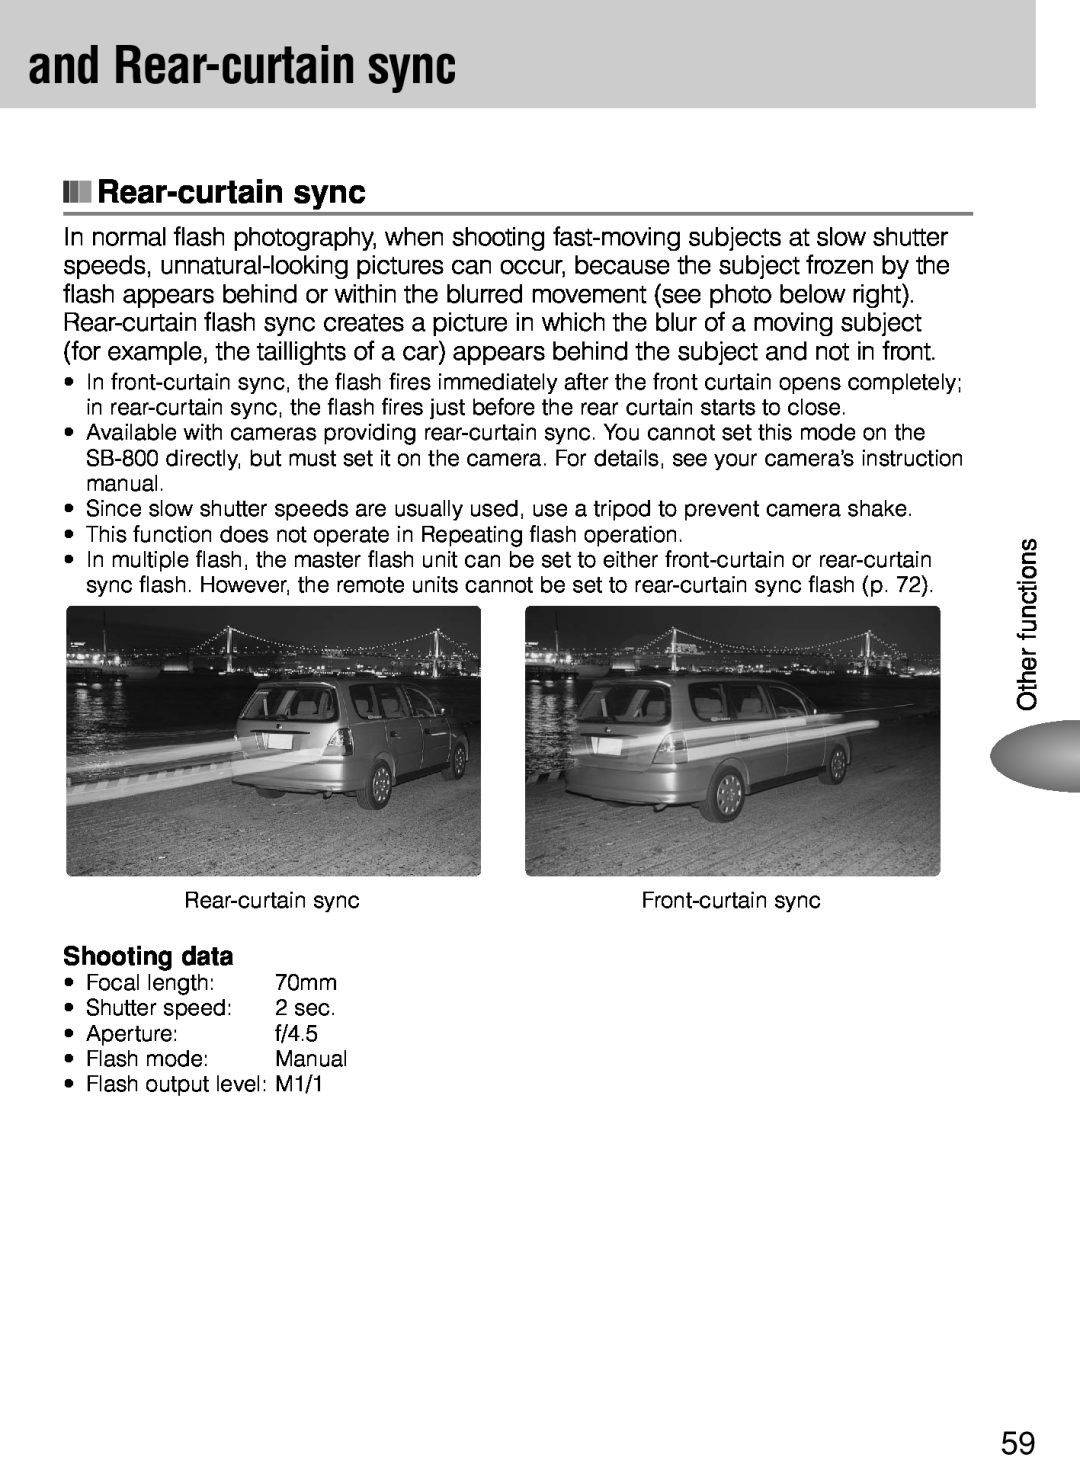 Nikon SB-800 instruction manual and Rear-curtain sync, Shooting data 